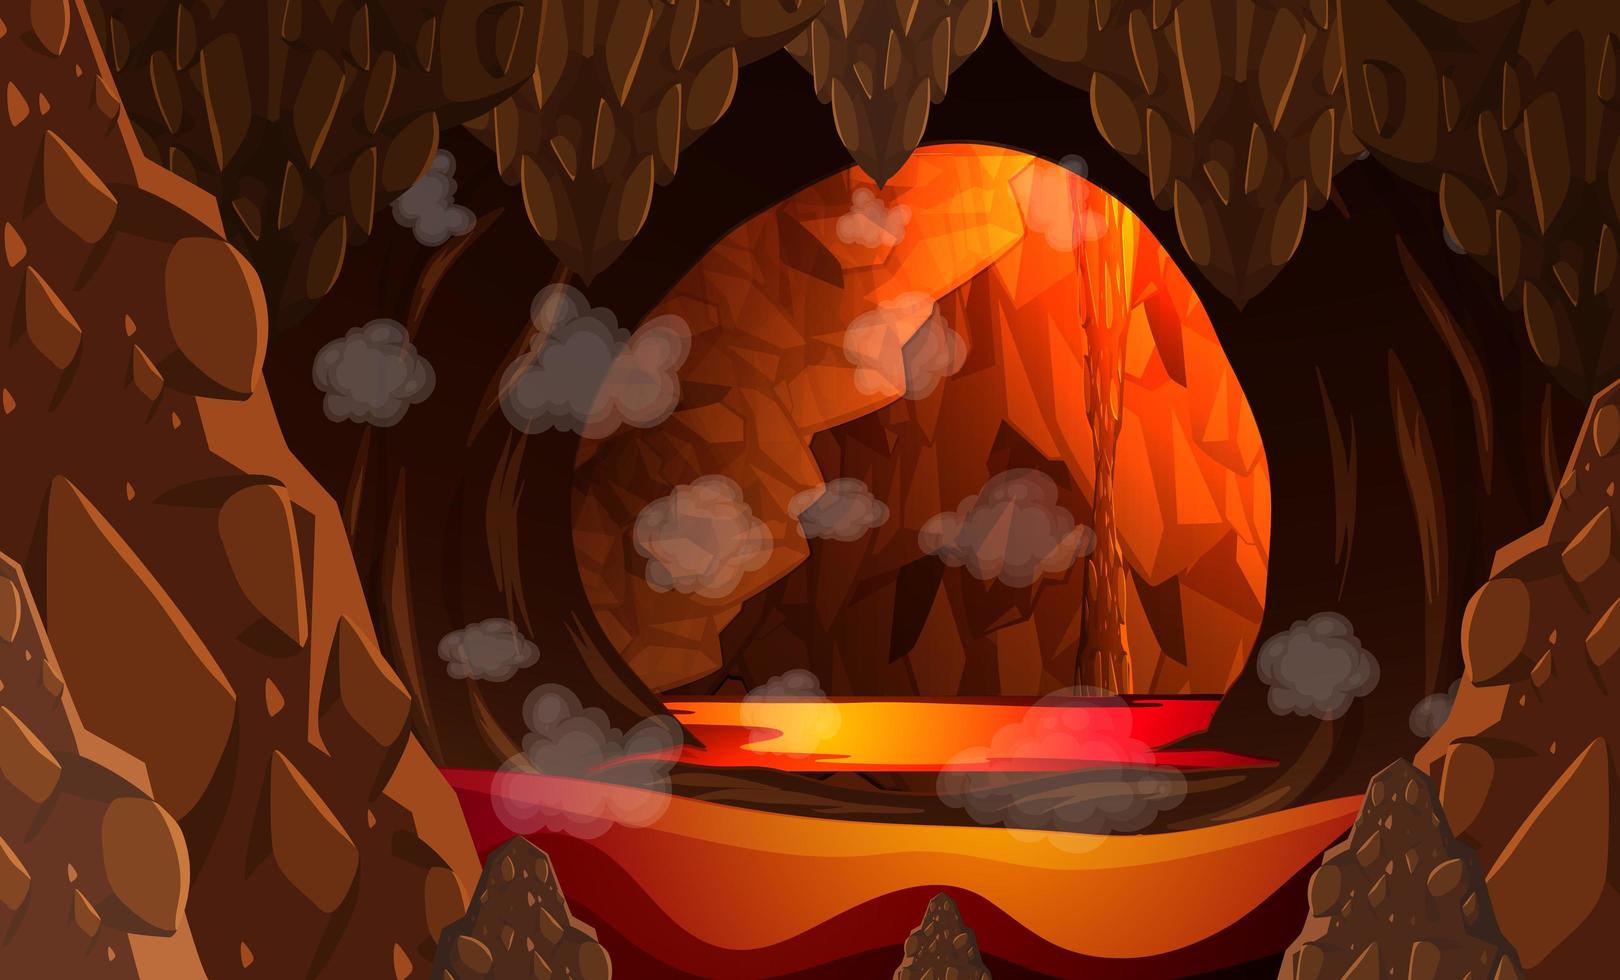 Infernal dark cave with lava scene vector